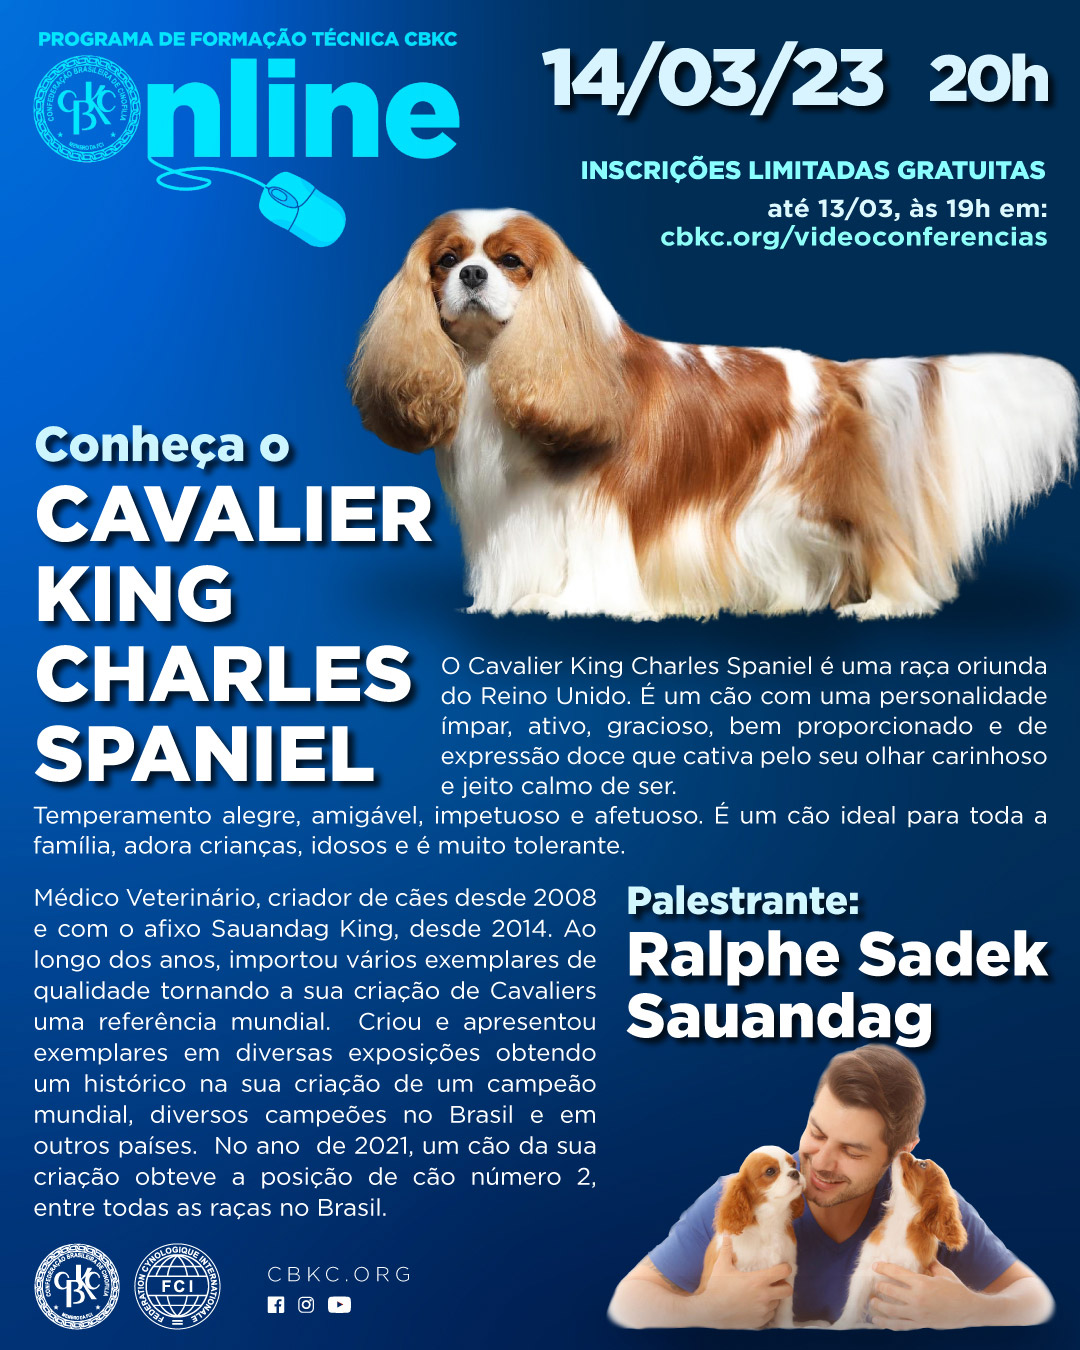 Imagem Videoconferências CBKC: Conheça o Cavalier King Charles Spaniel